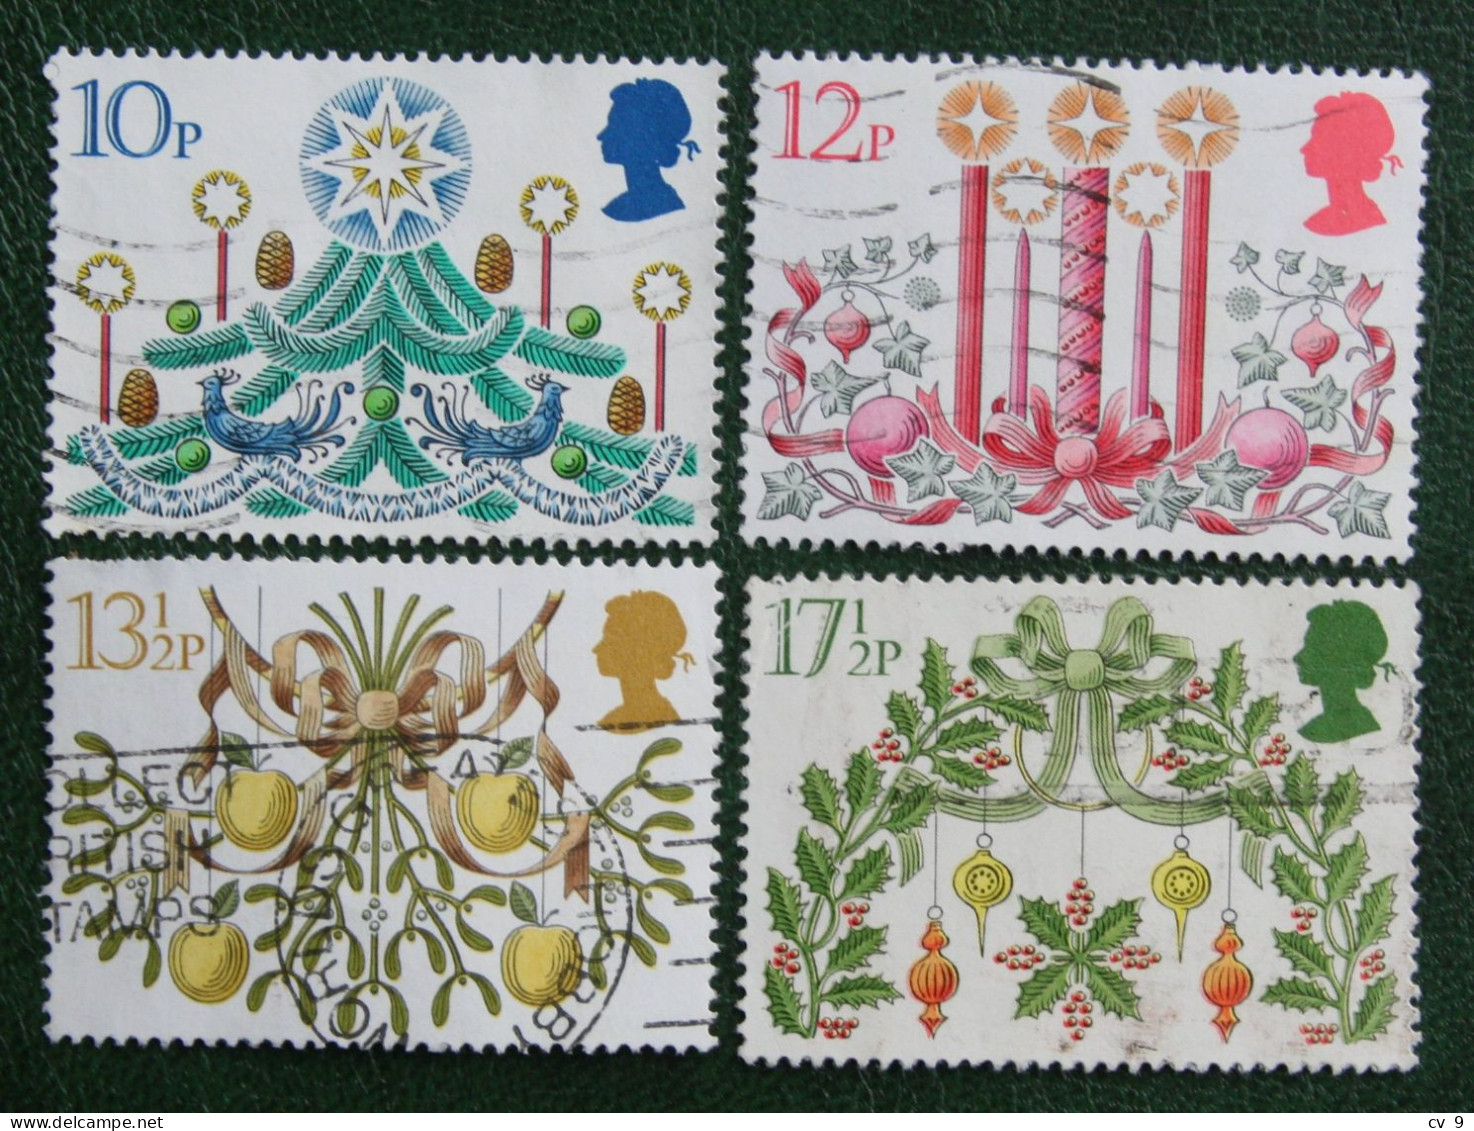 Natale Weihnachten Xmas Noel Kerst (Mi 856-858 860) 1980 Used Gebruikt Oblitere ENGLAND GRANDE-BRETAGNE GB GREAT BRITAIN - Used Stamps